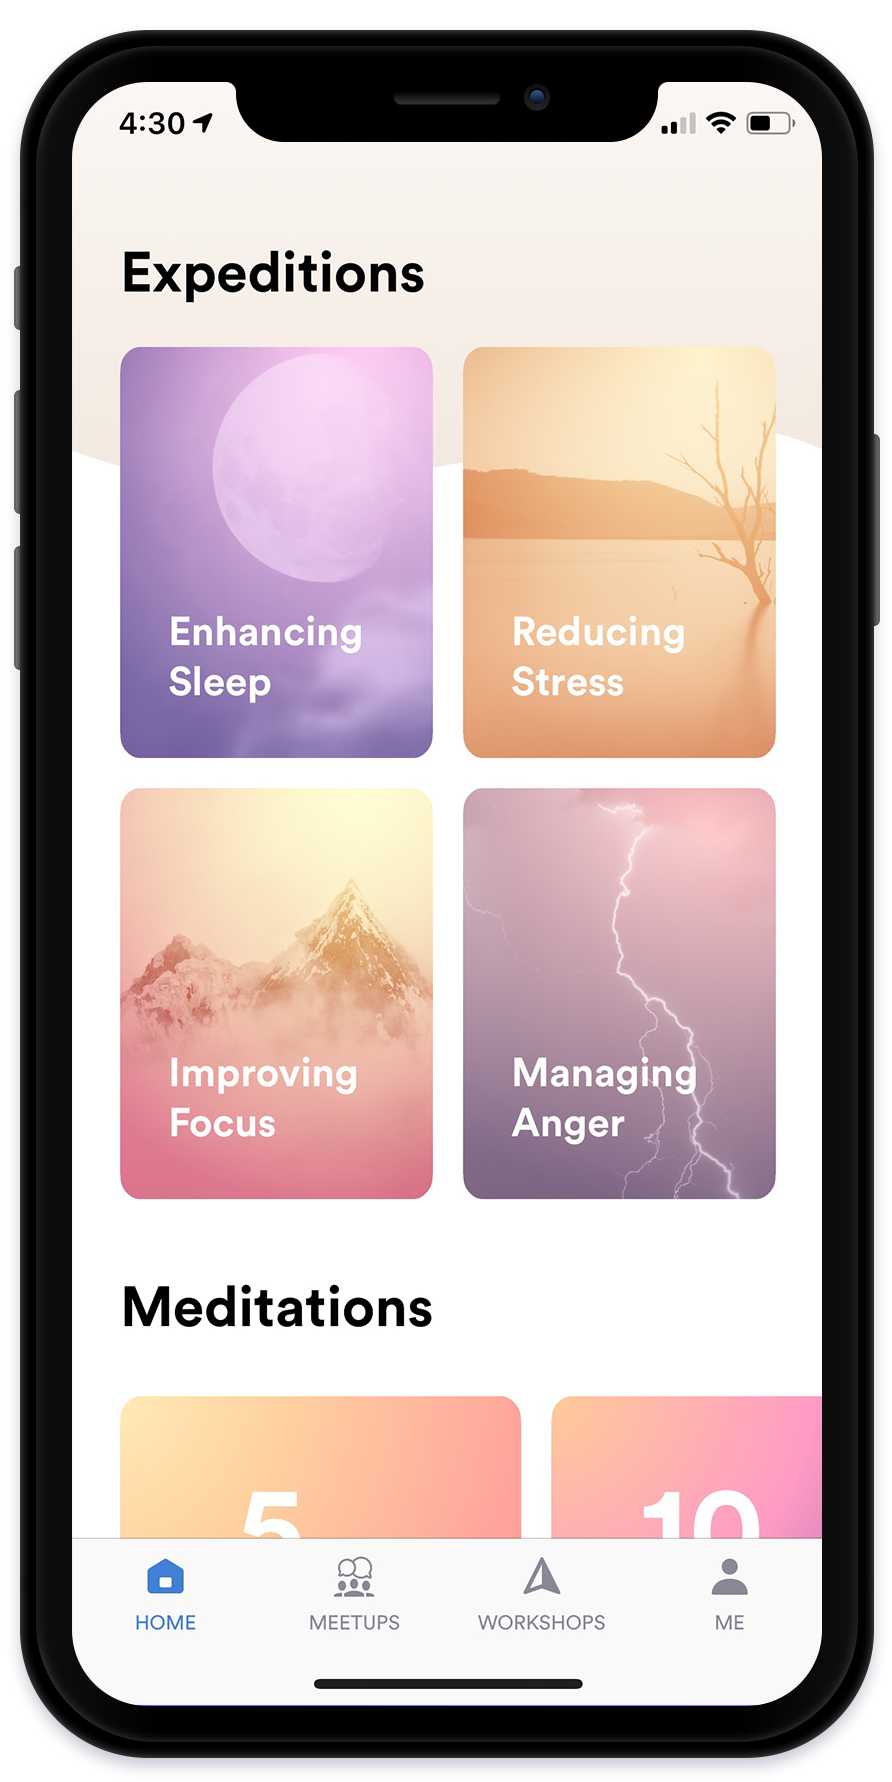 meditation app case study